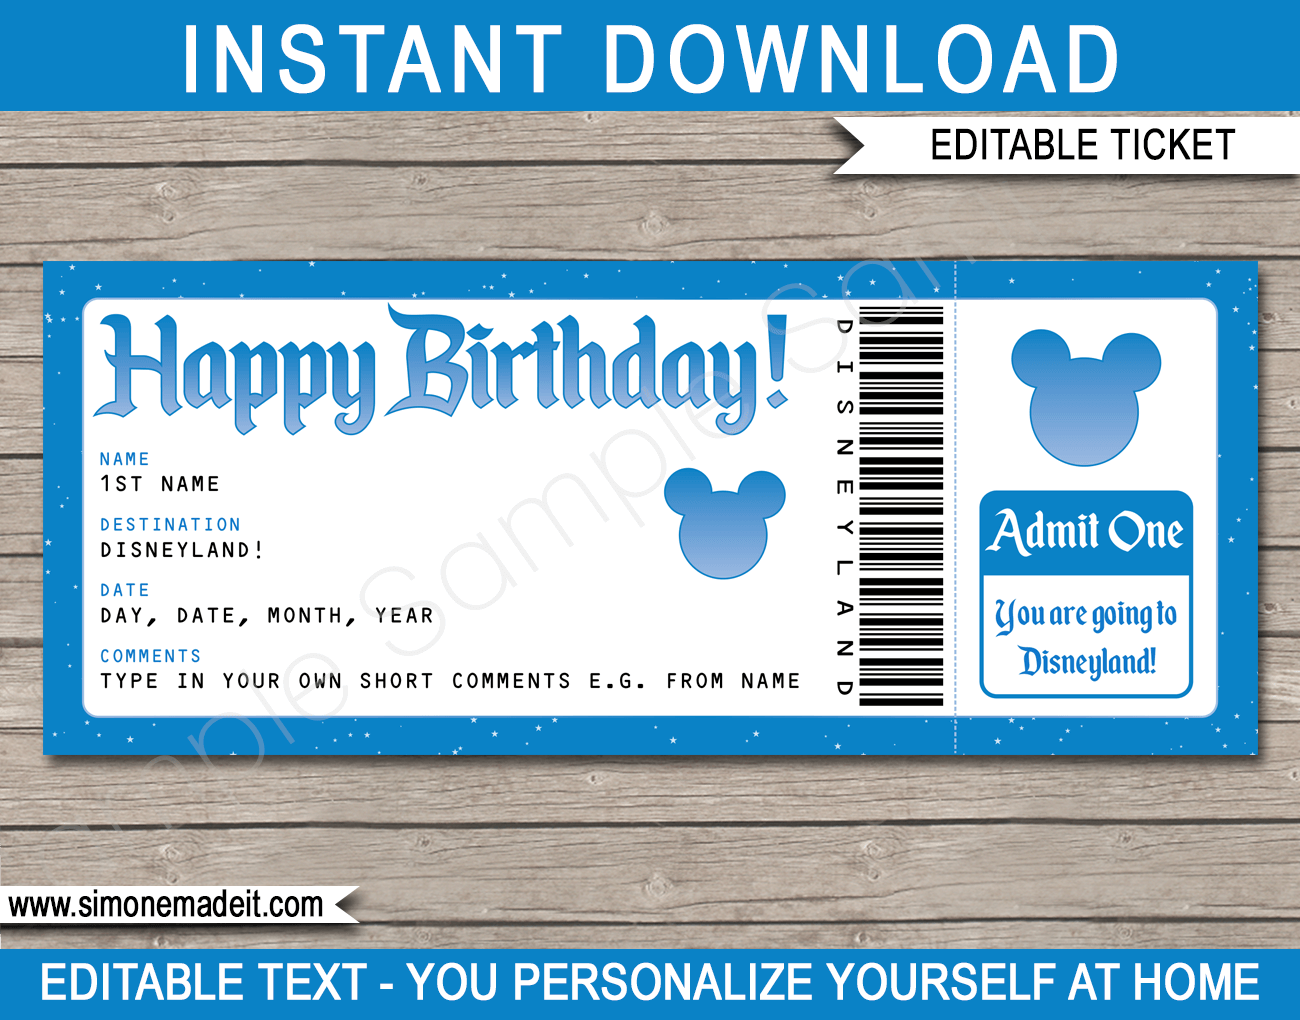 Free Disneyland Ticket Template